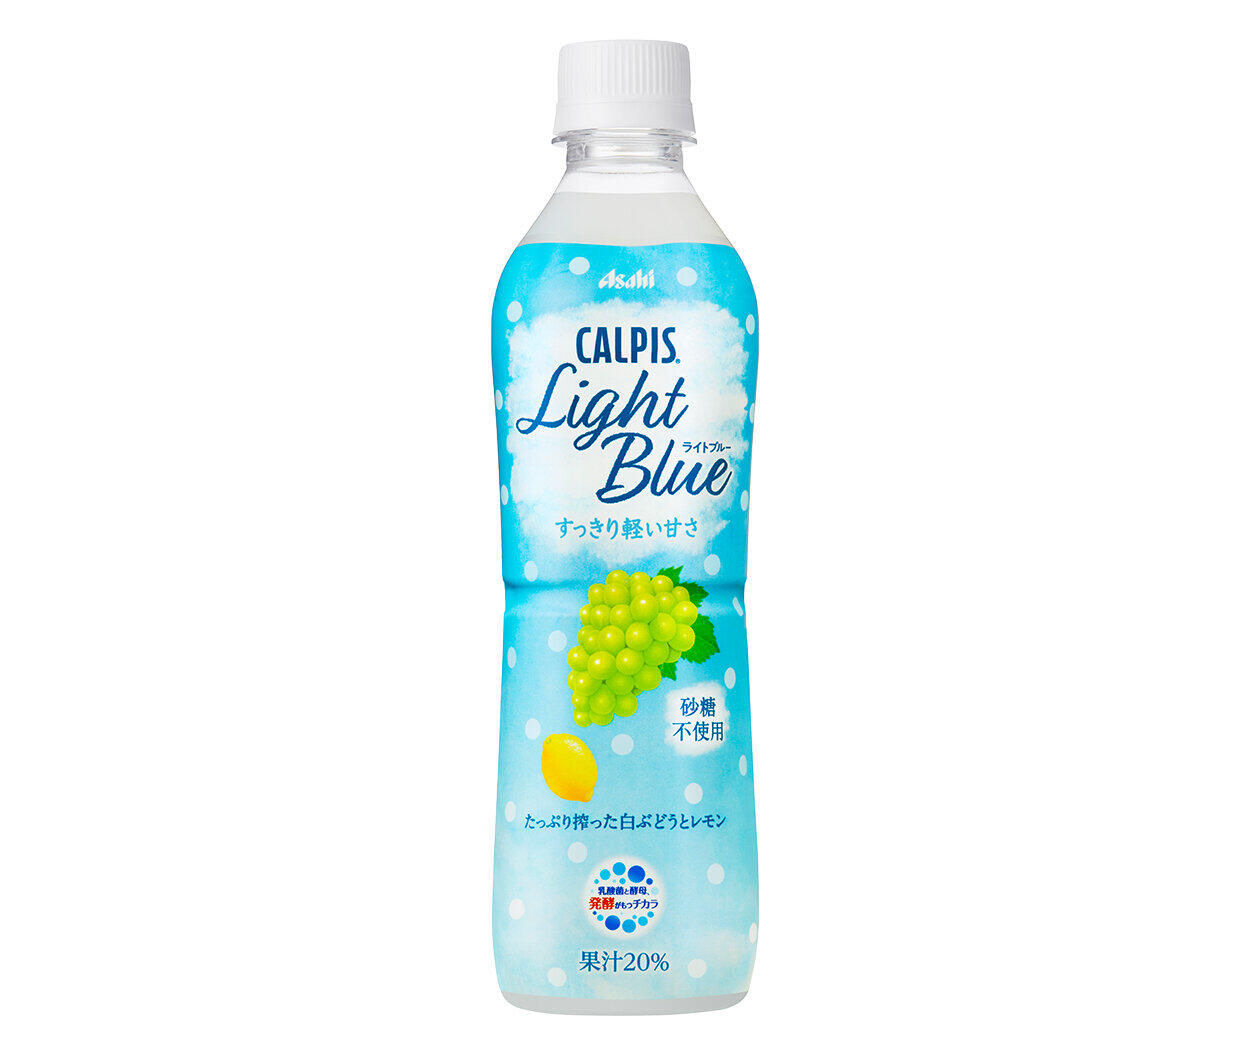 「『CALPIS』Light Blue」　砂糖不使用の新しい「カルピス」